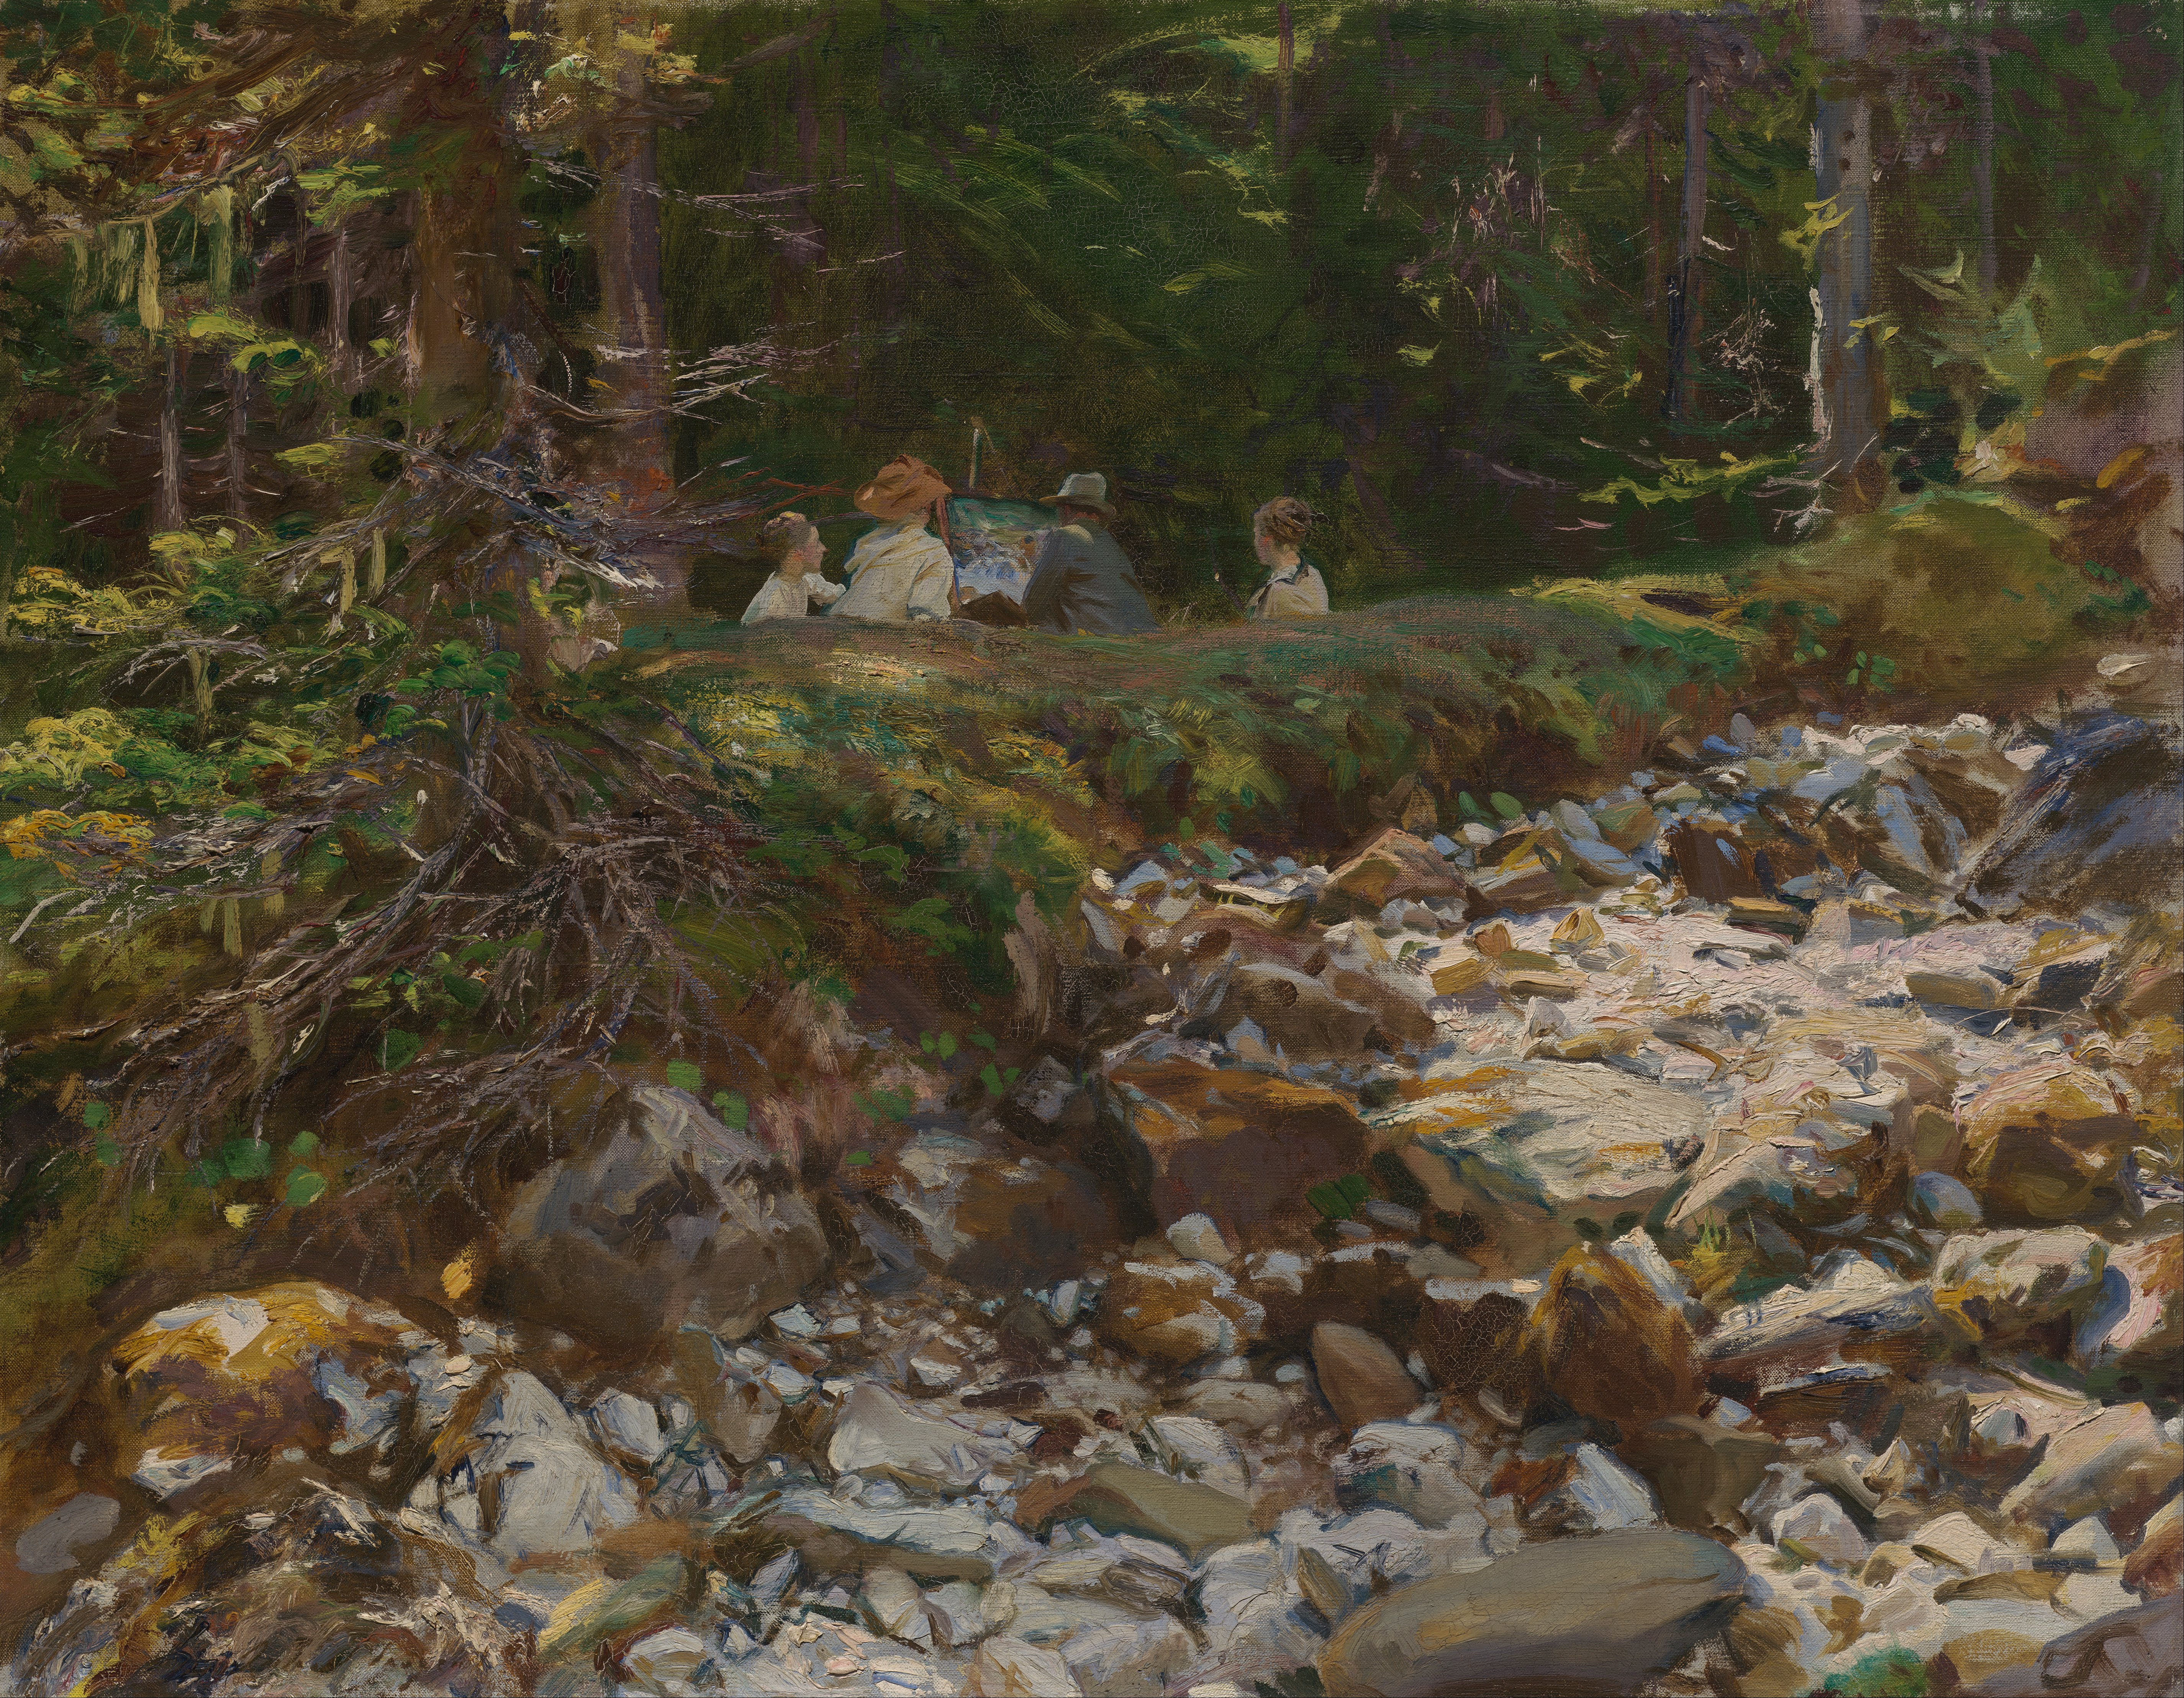 People 5701x4432 John Singer Sargent classic art painting nature artwork